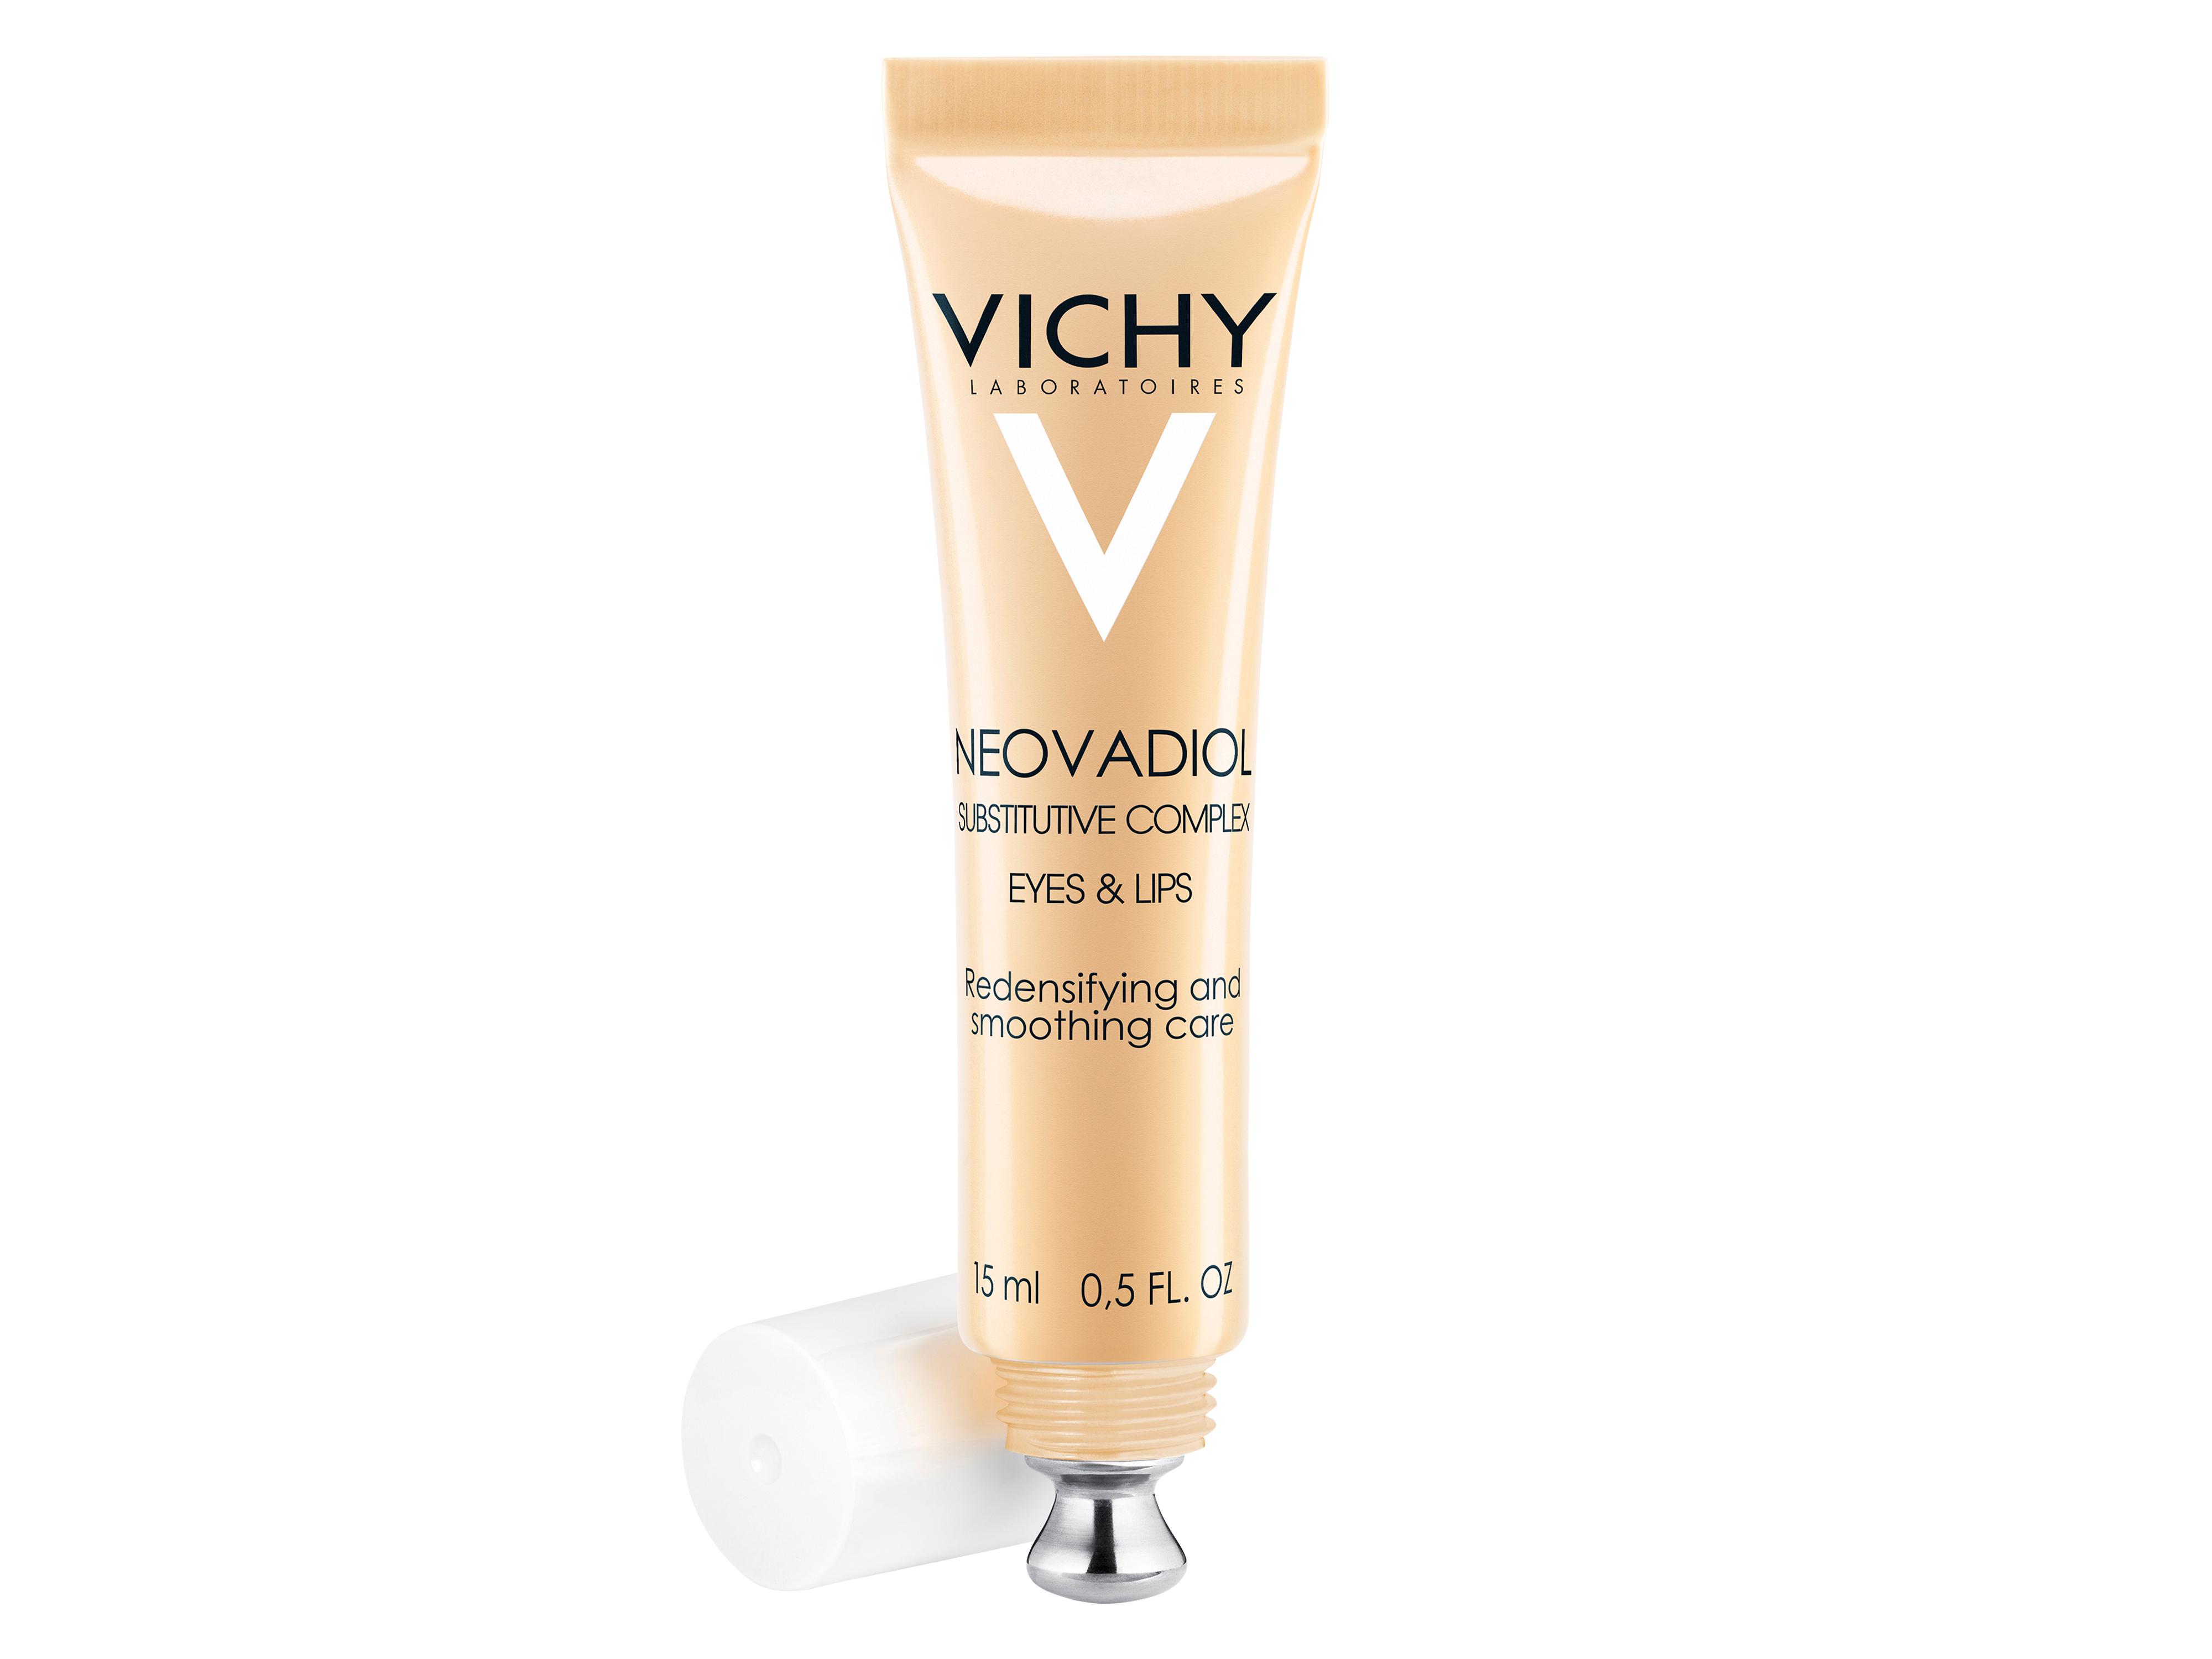 Vichy Neovadiol Substitutive Complex Eyes & Lips, 15 ml